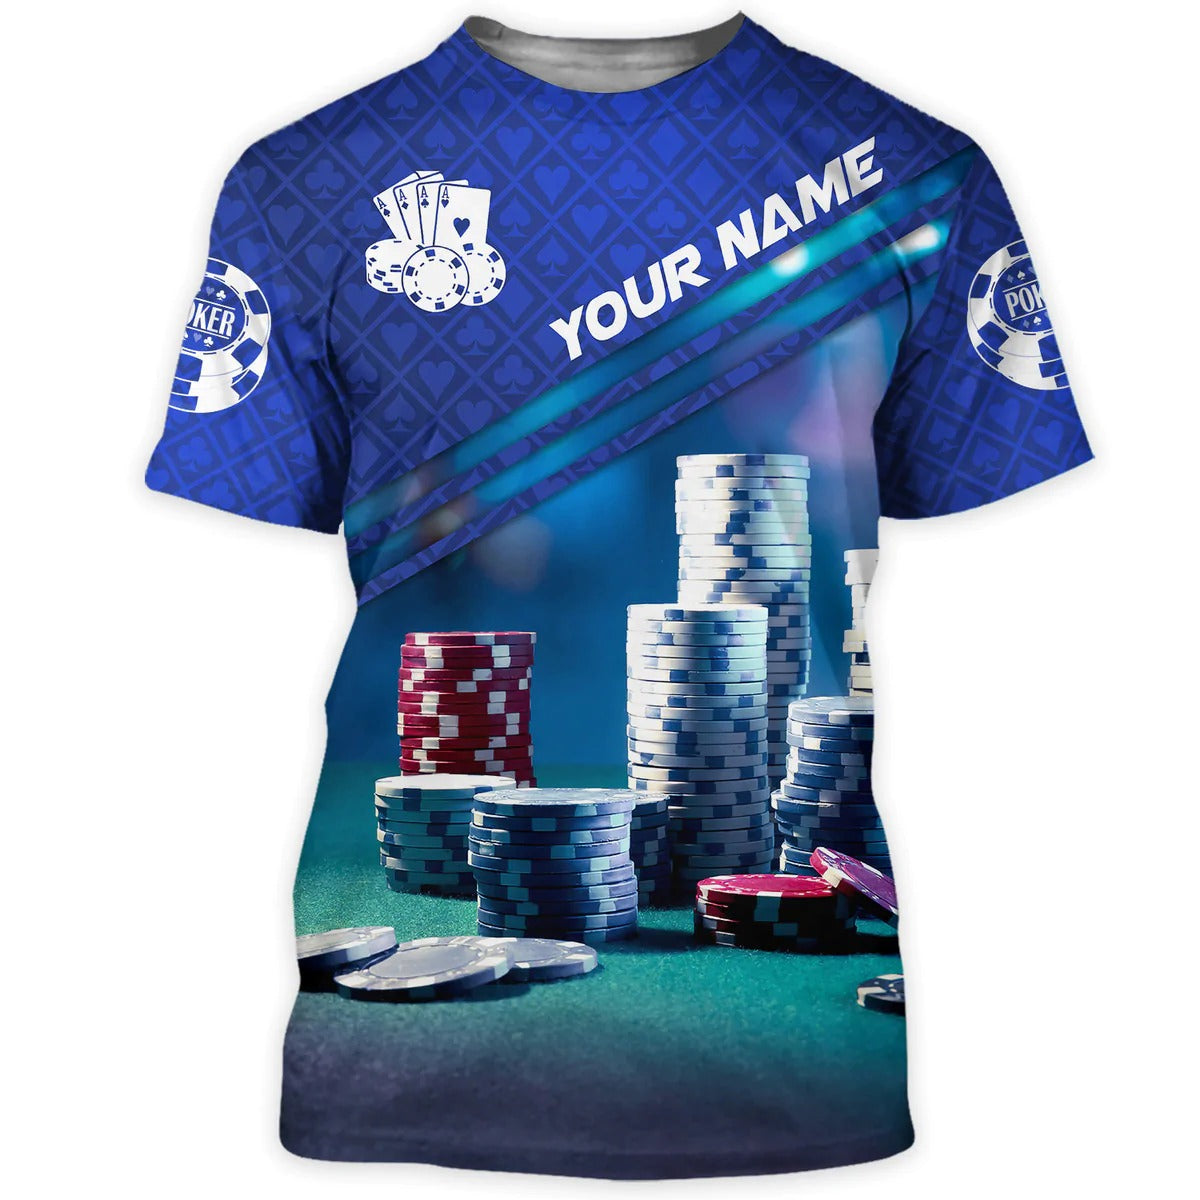 Personalized 3D Blue Poker Shirt/ Unisex Poker Tshirt Men Women/ Poker Player Uniform